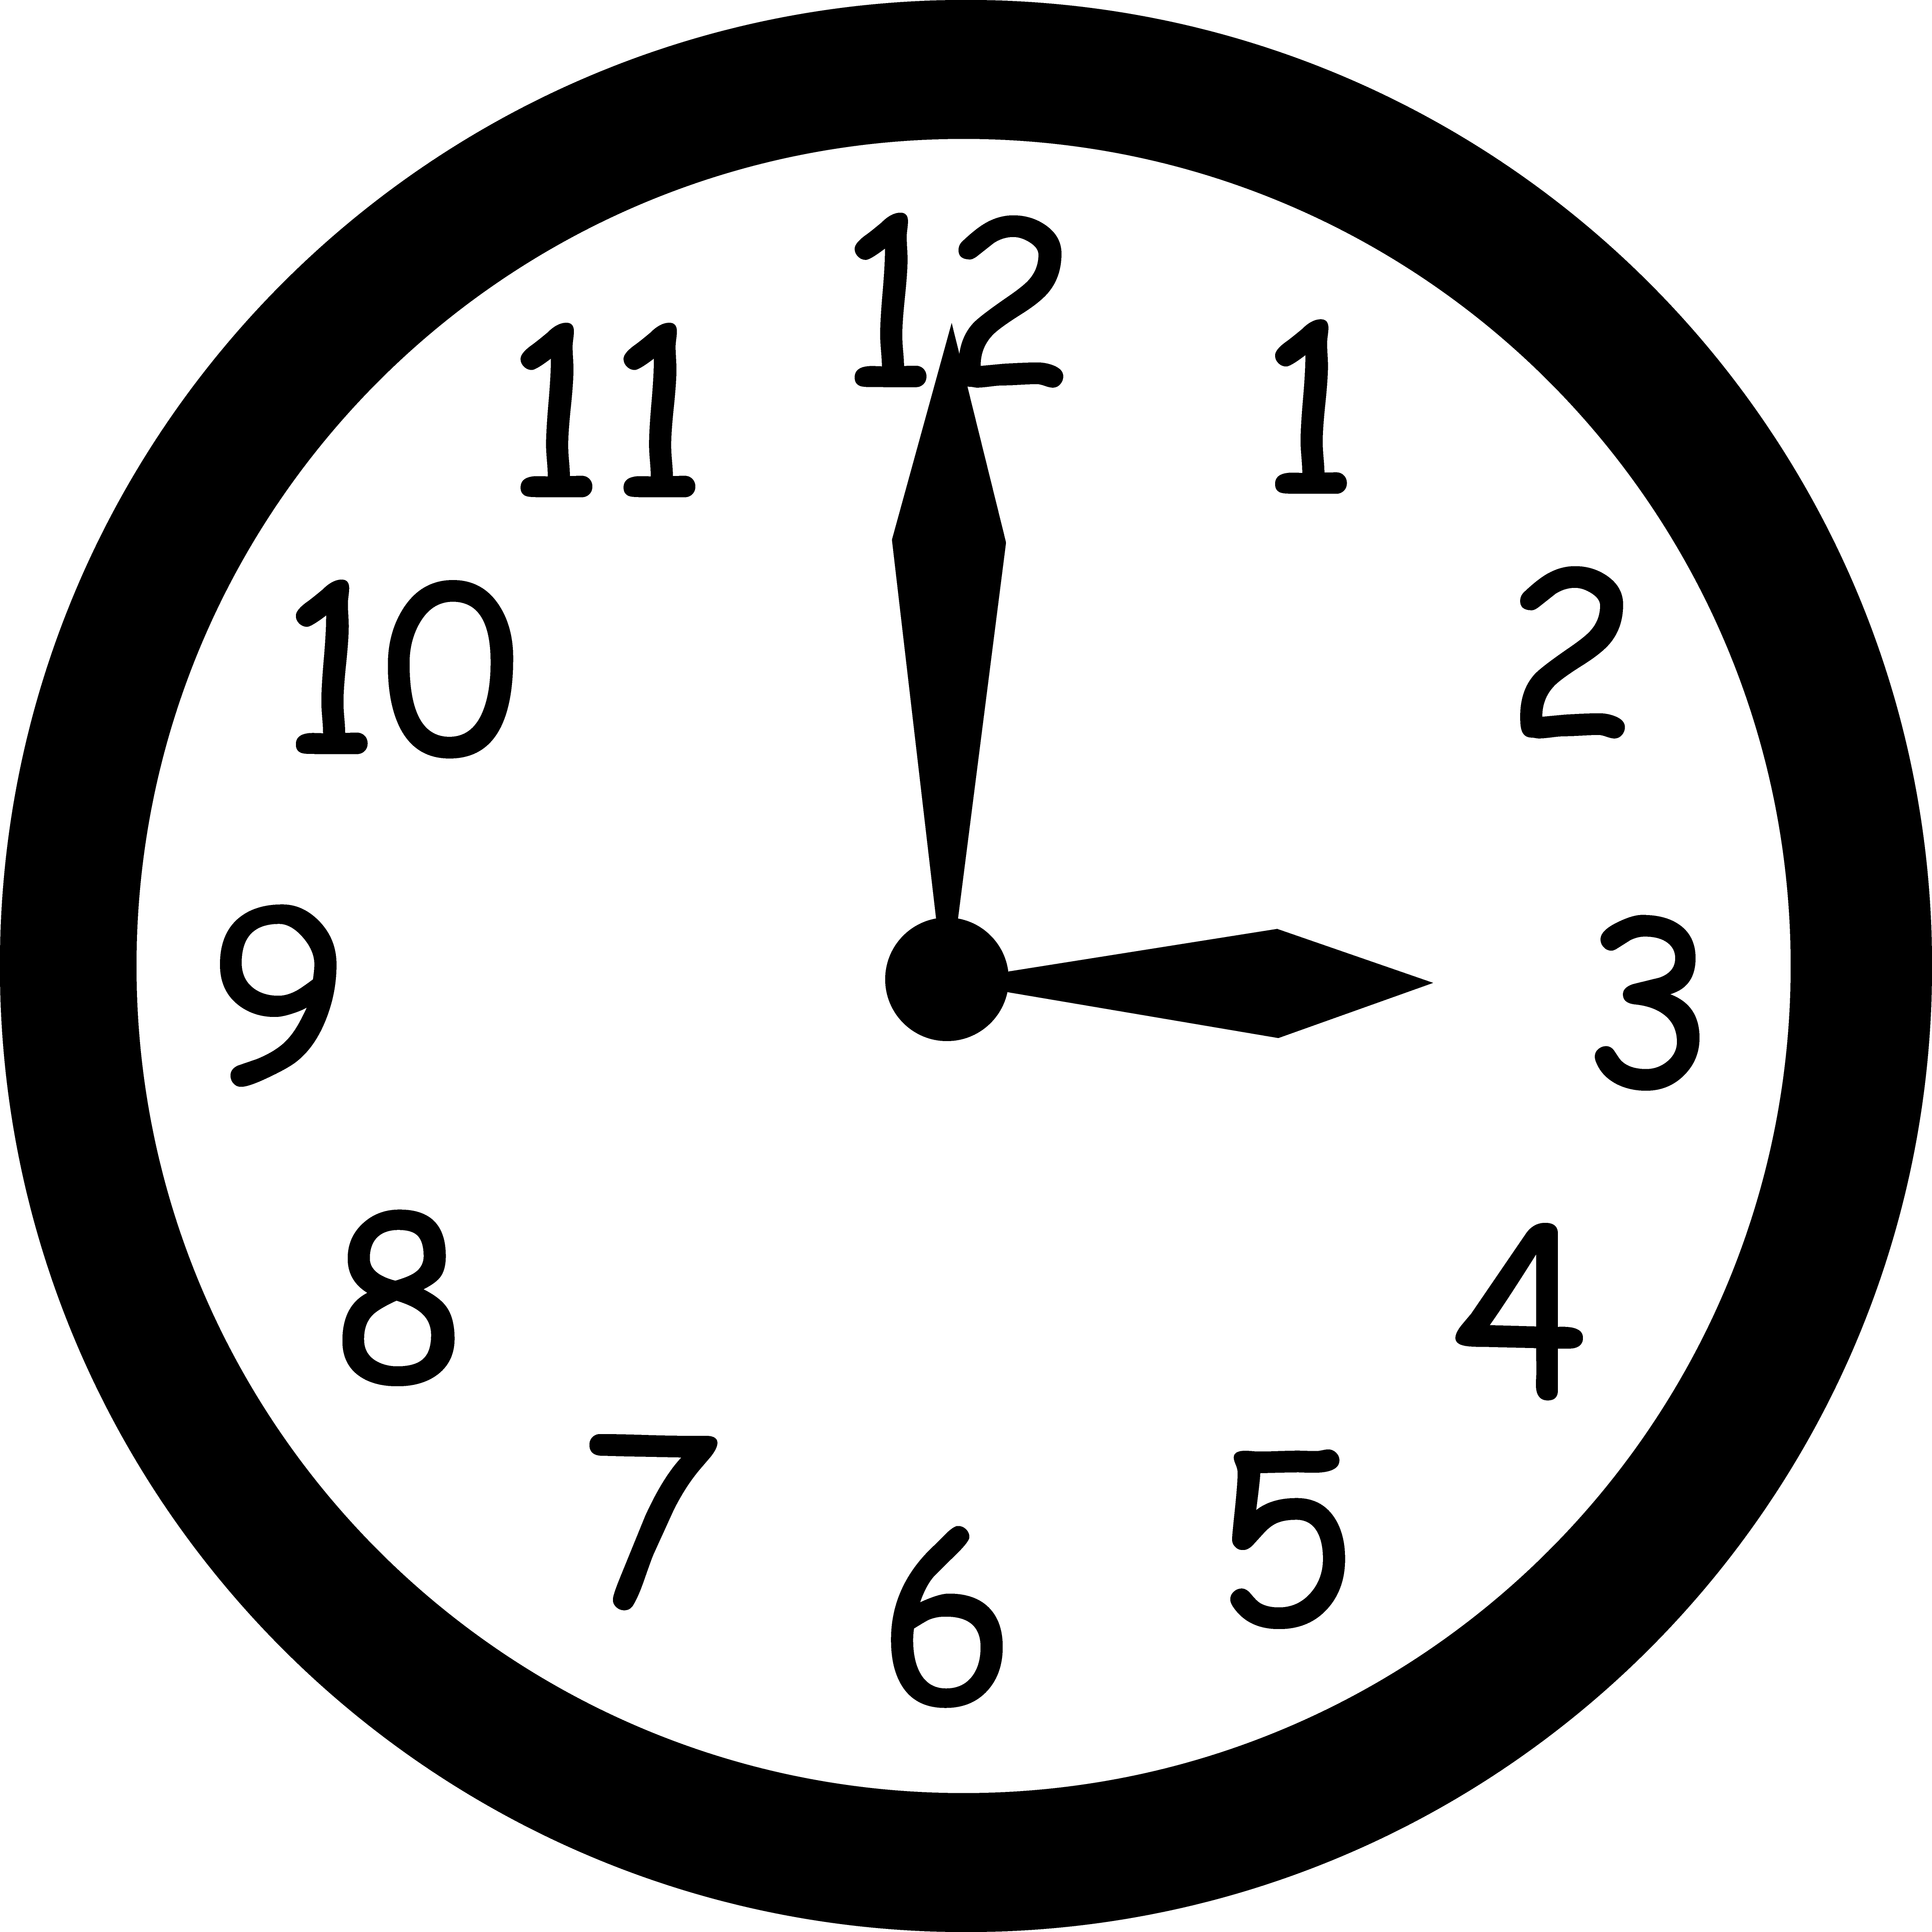 Clocks 